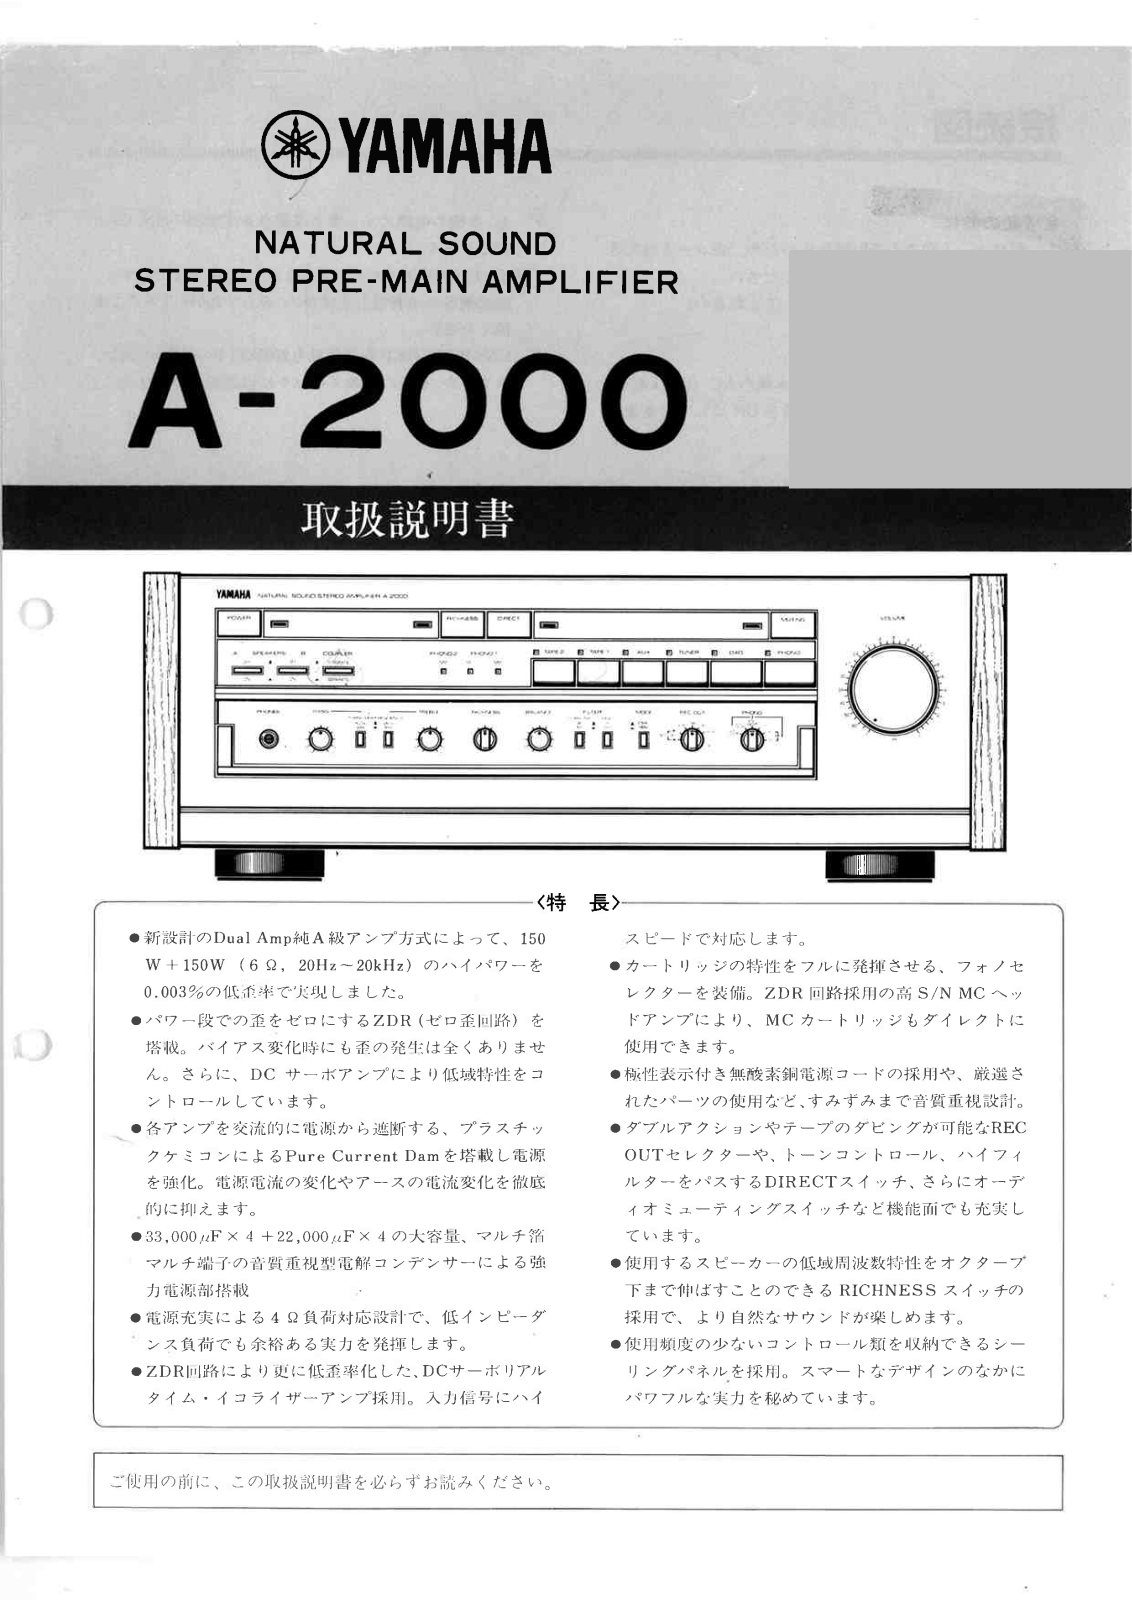 Yamaha A-2000 Owners Manual